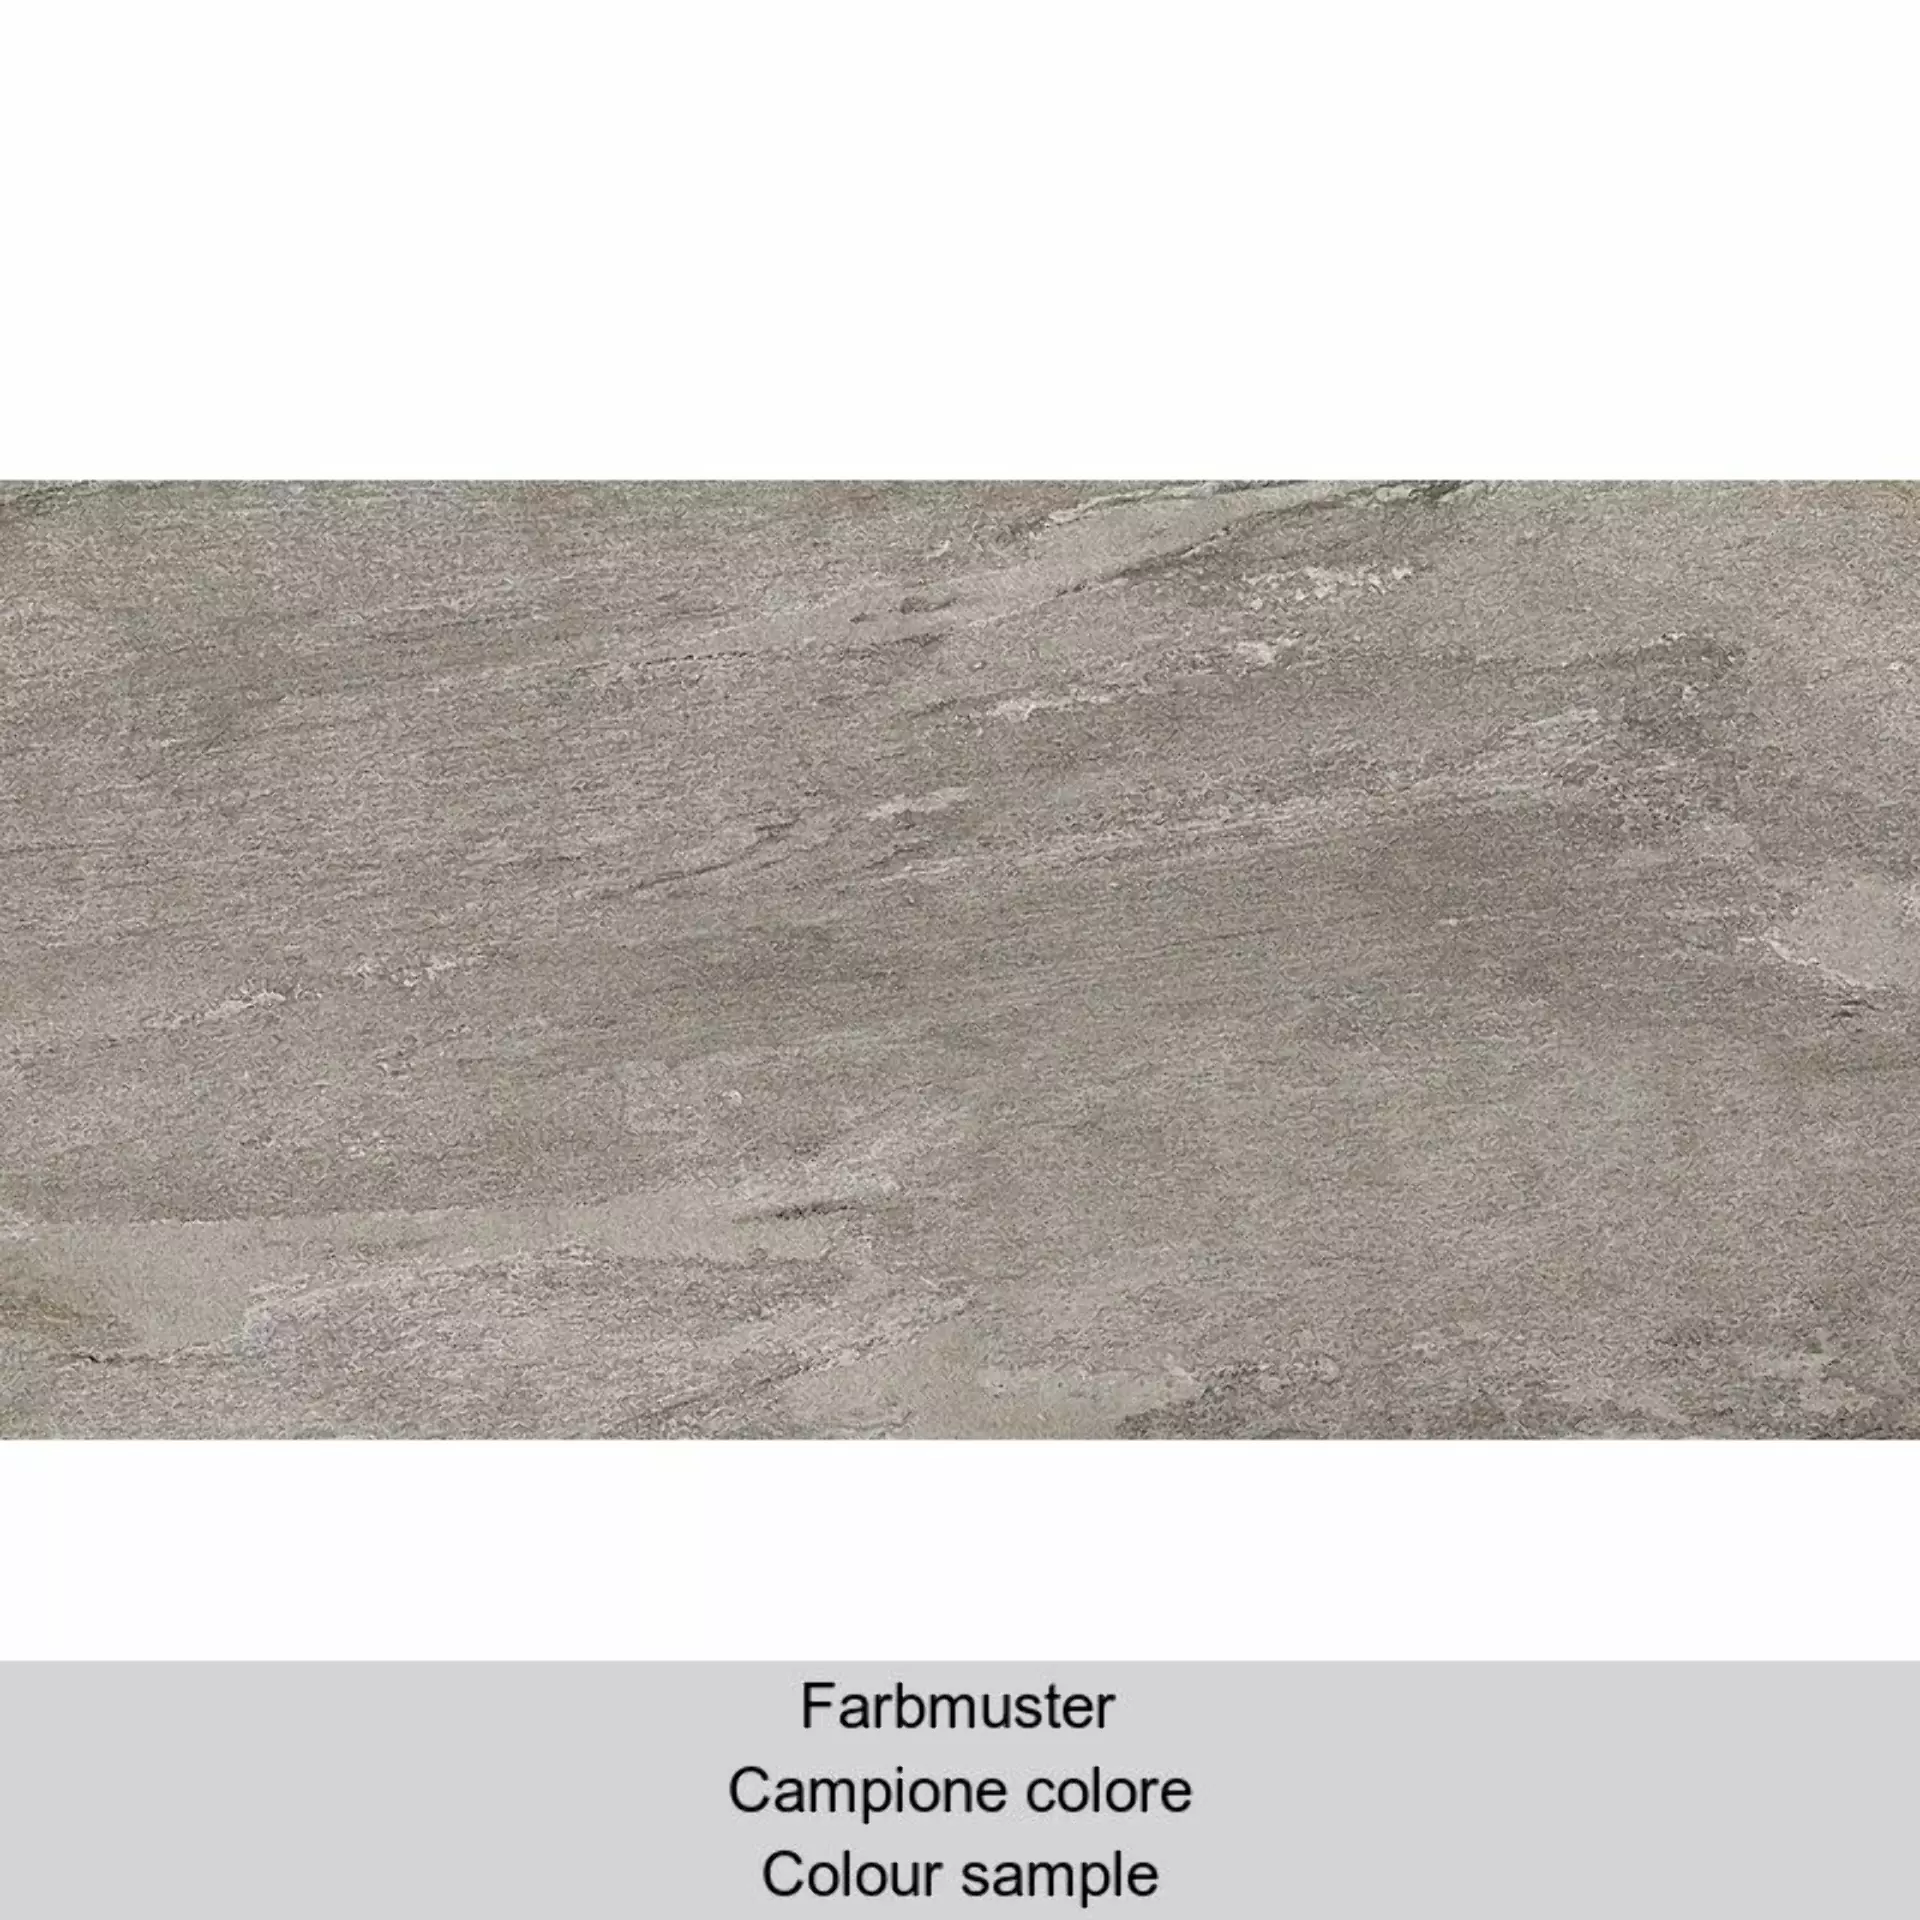 Century Stonerock Ash Stone Grip 0119803 30x60cm rectified 9mm